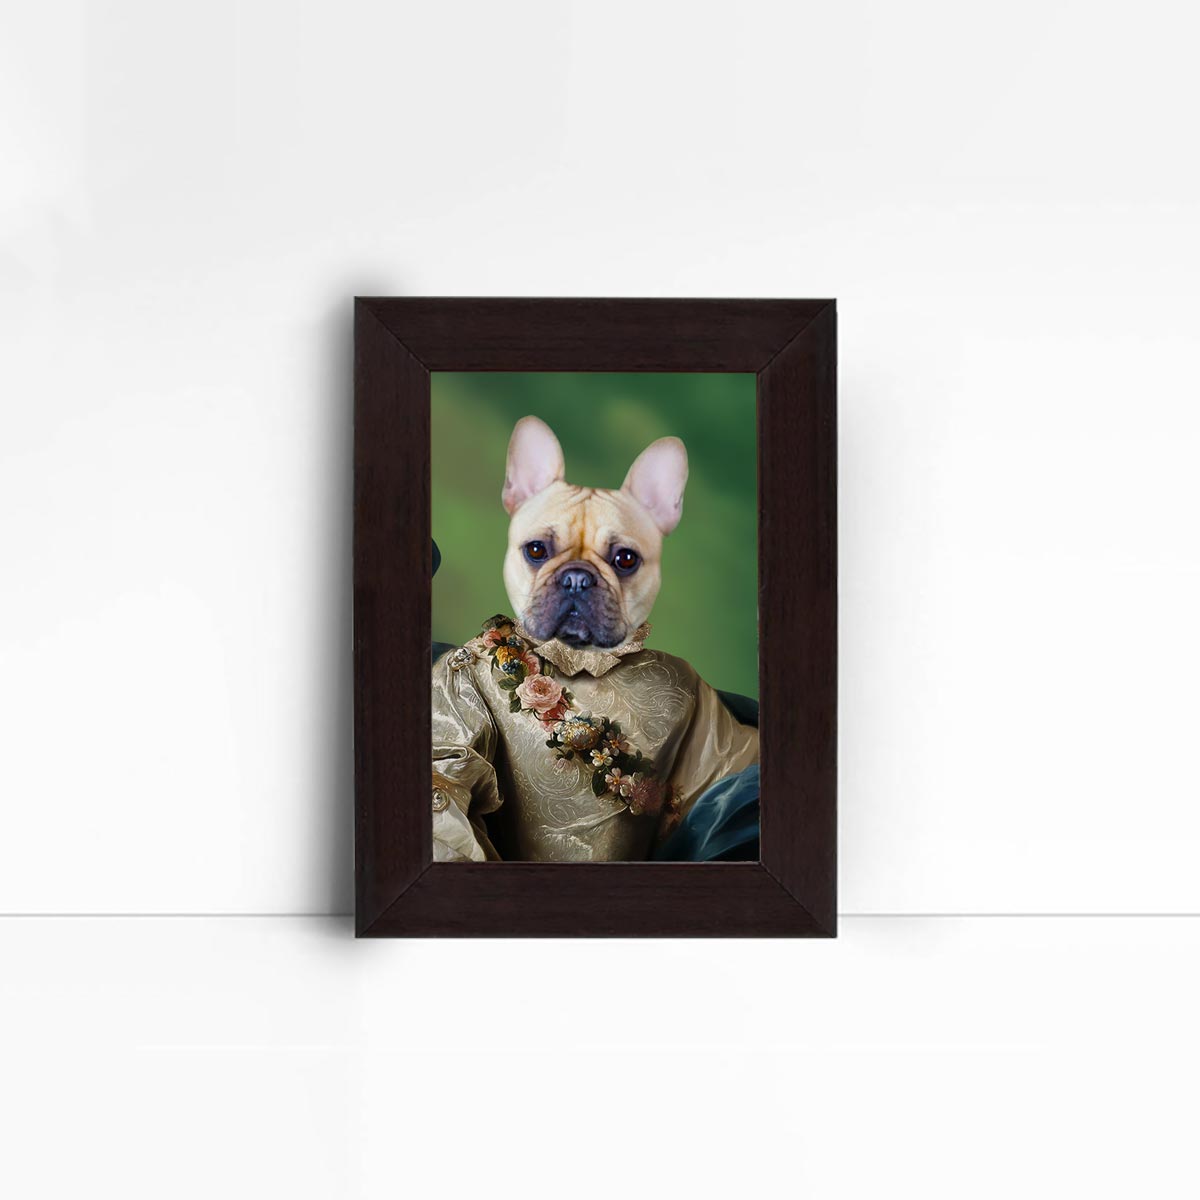 The Princess Pet Digital Portrait Photo Frame